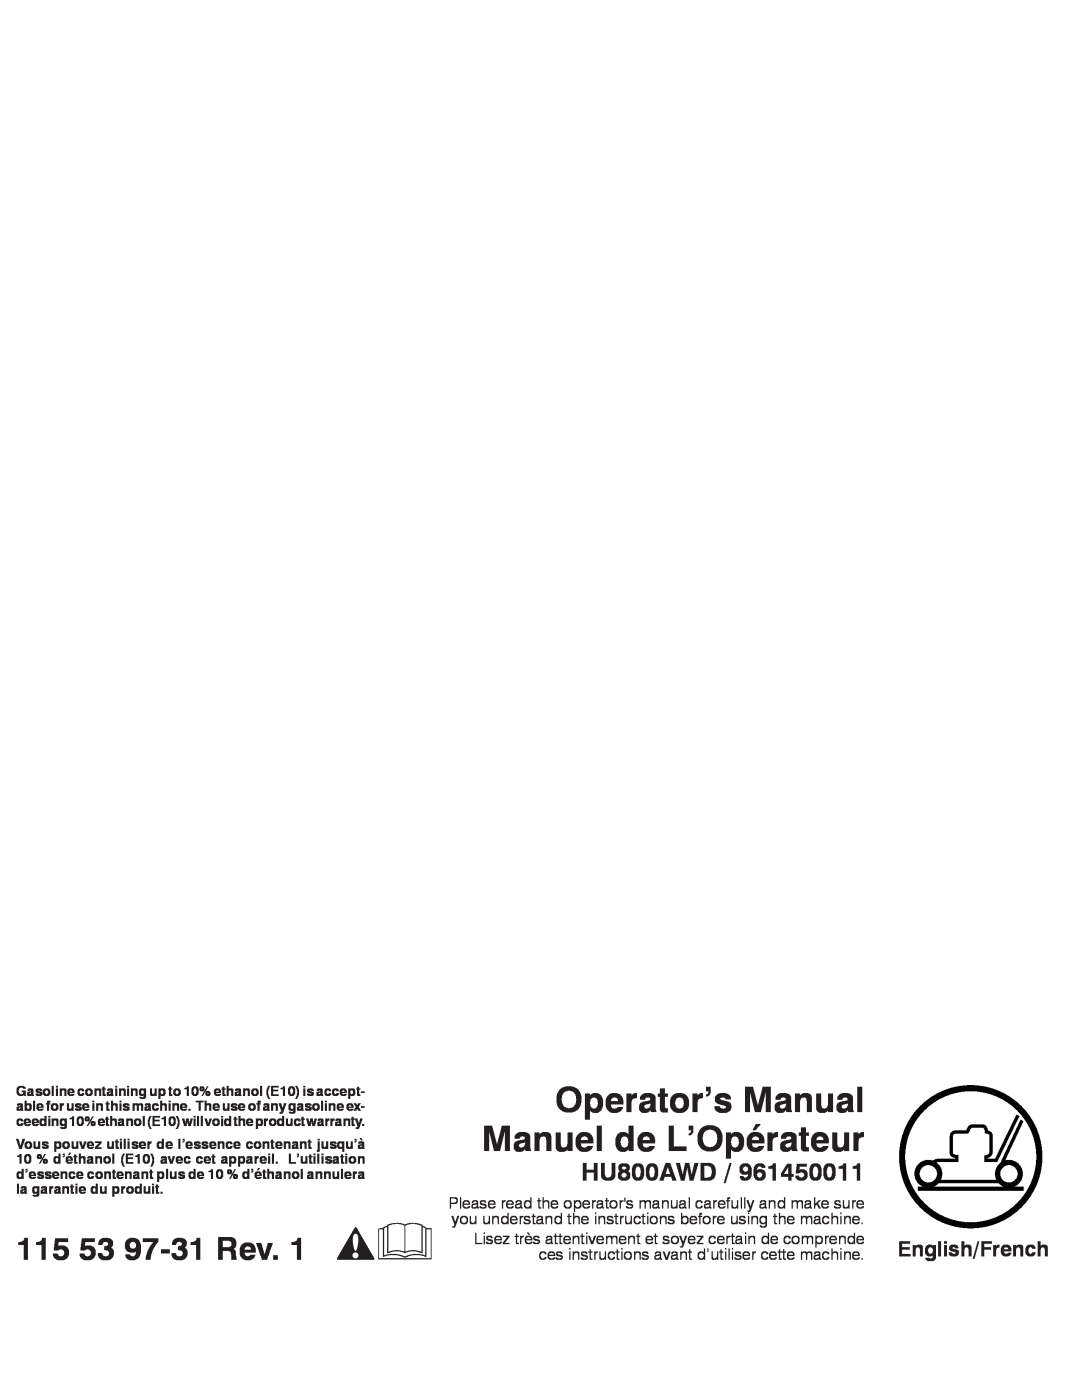 Husqvarna HU800AWD warranty Operator’s Manual Manuel de L’Opérateur, 115 53 97-31 Rev, English/French 